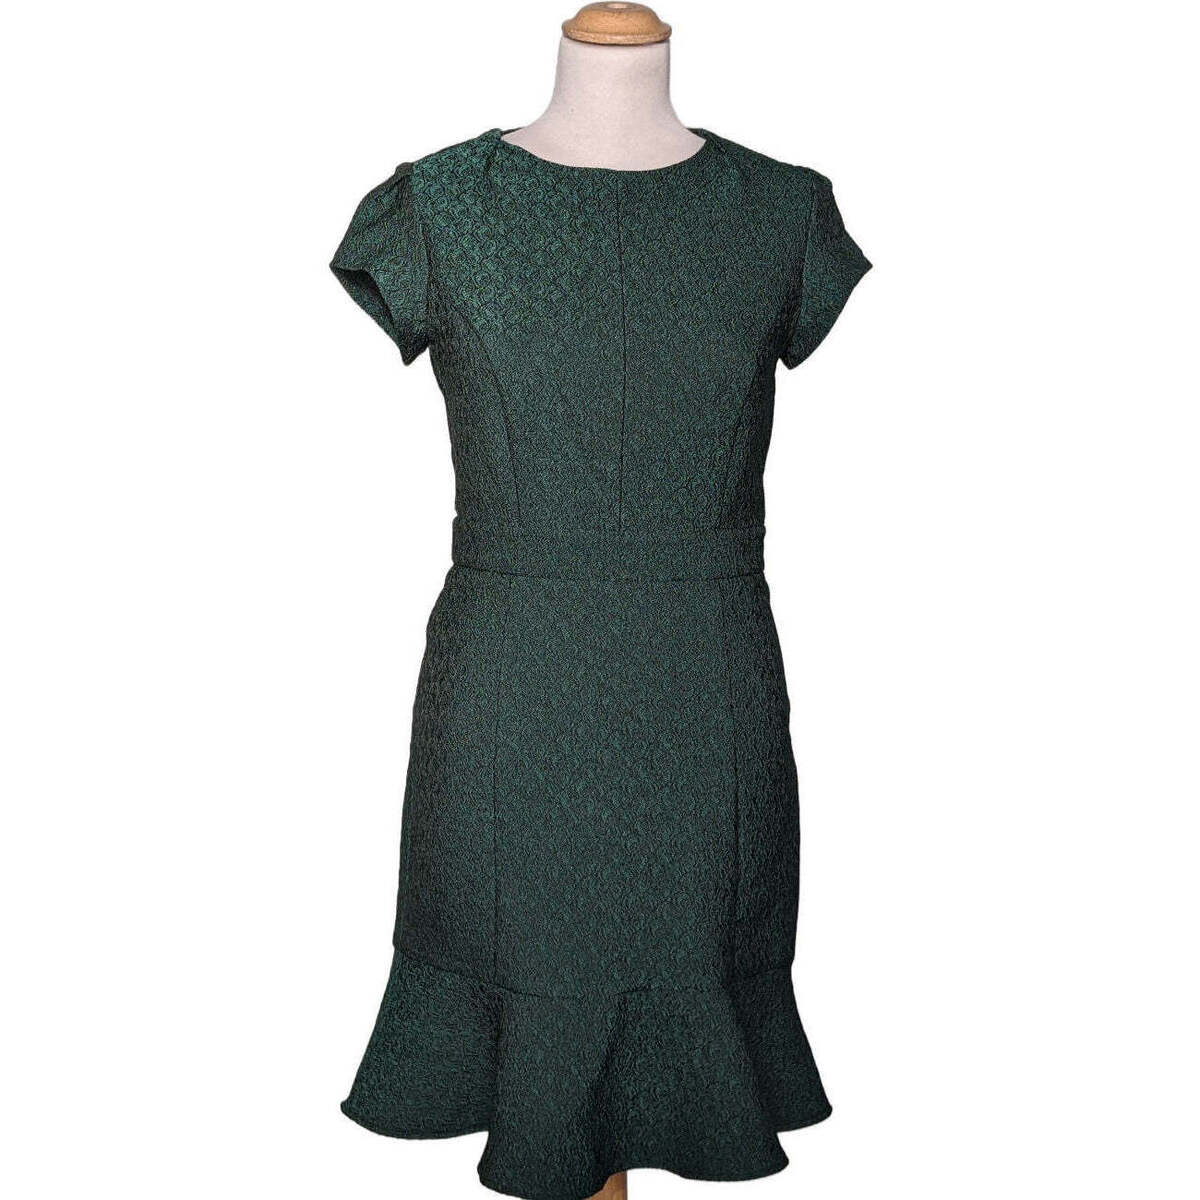 Vêtements Femme Robes courtes Kookaï robe courte  36 - T1 - S Vert Vert